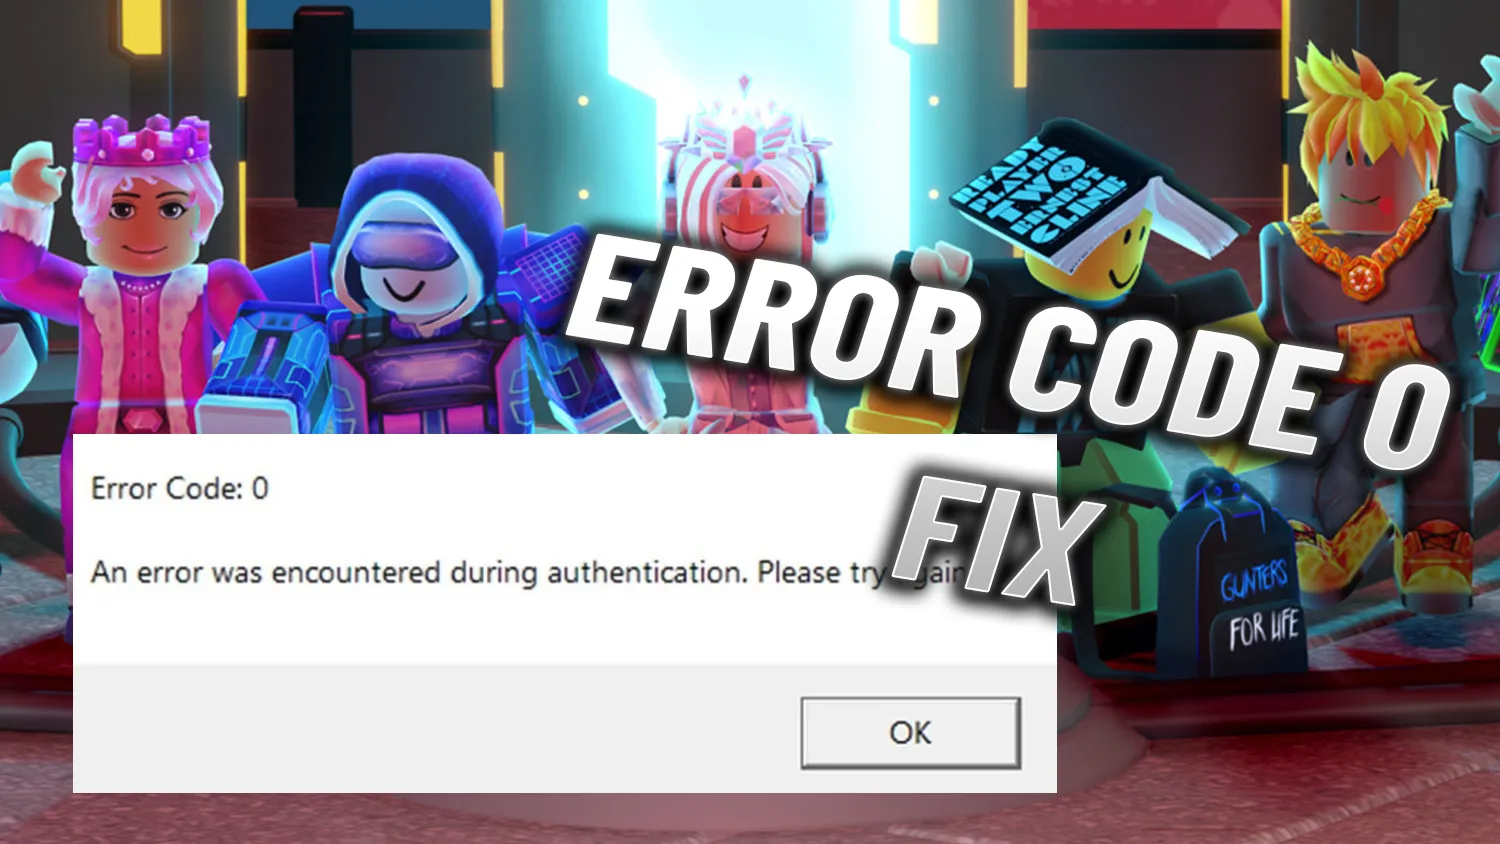 Fix Now.gg Roblox Error (12/14/2023 Updated) 